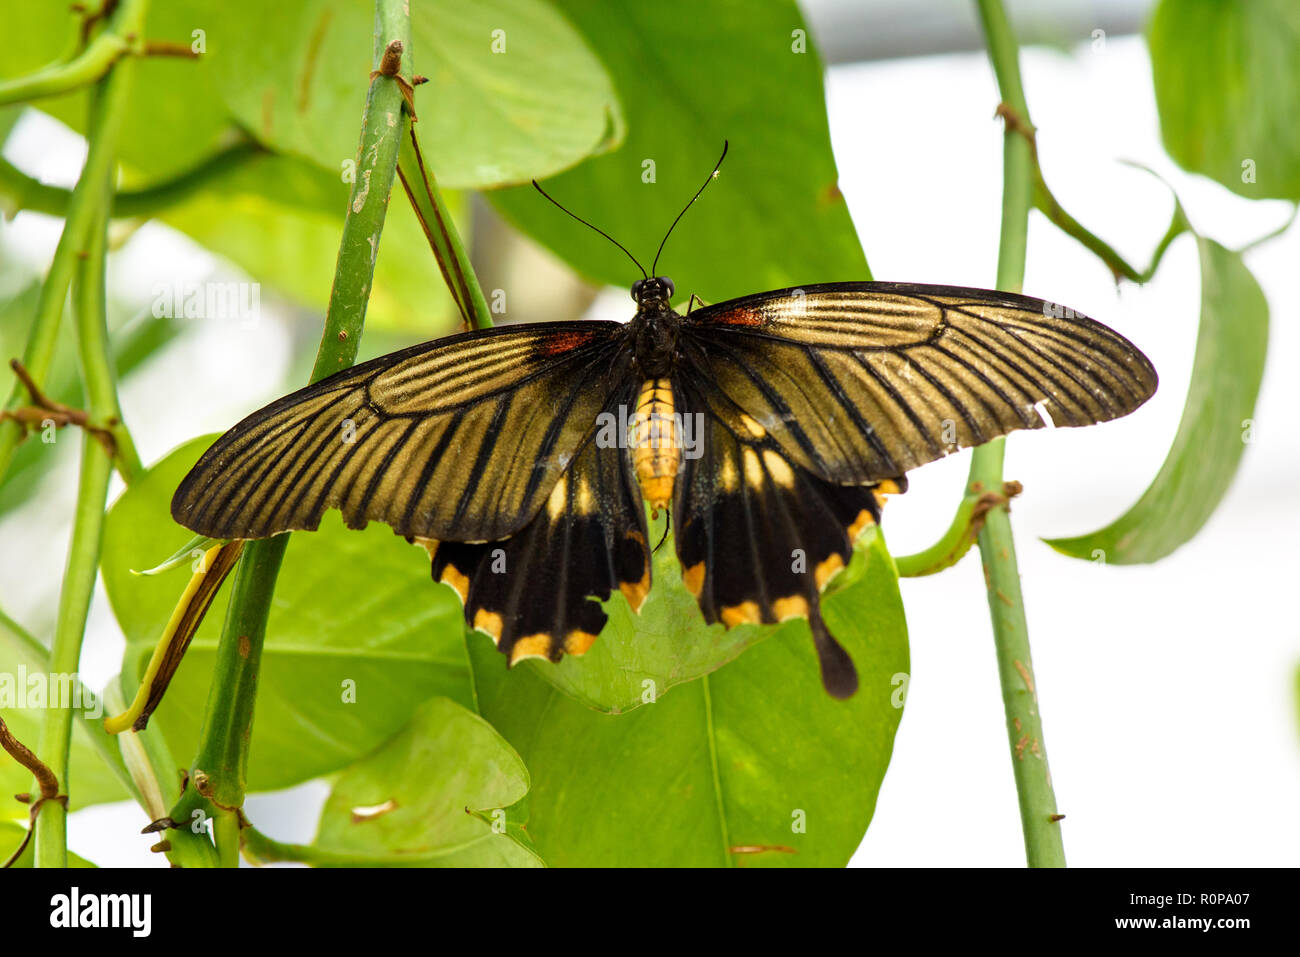 Mormón común Butterfly (Papilio polytes) en la hoja Foto de stock